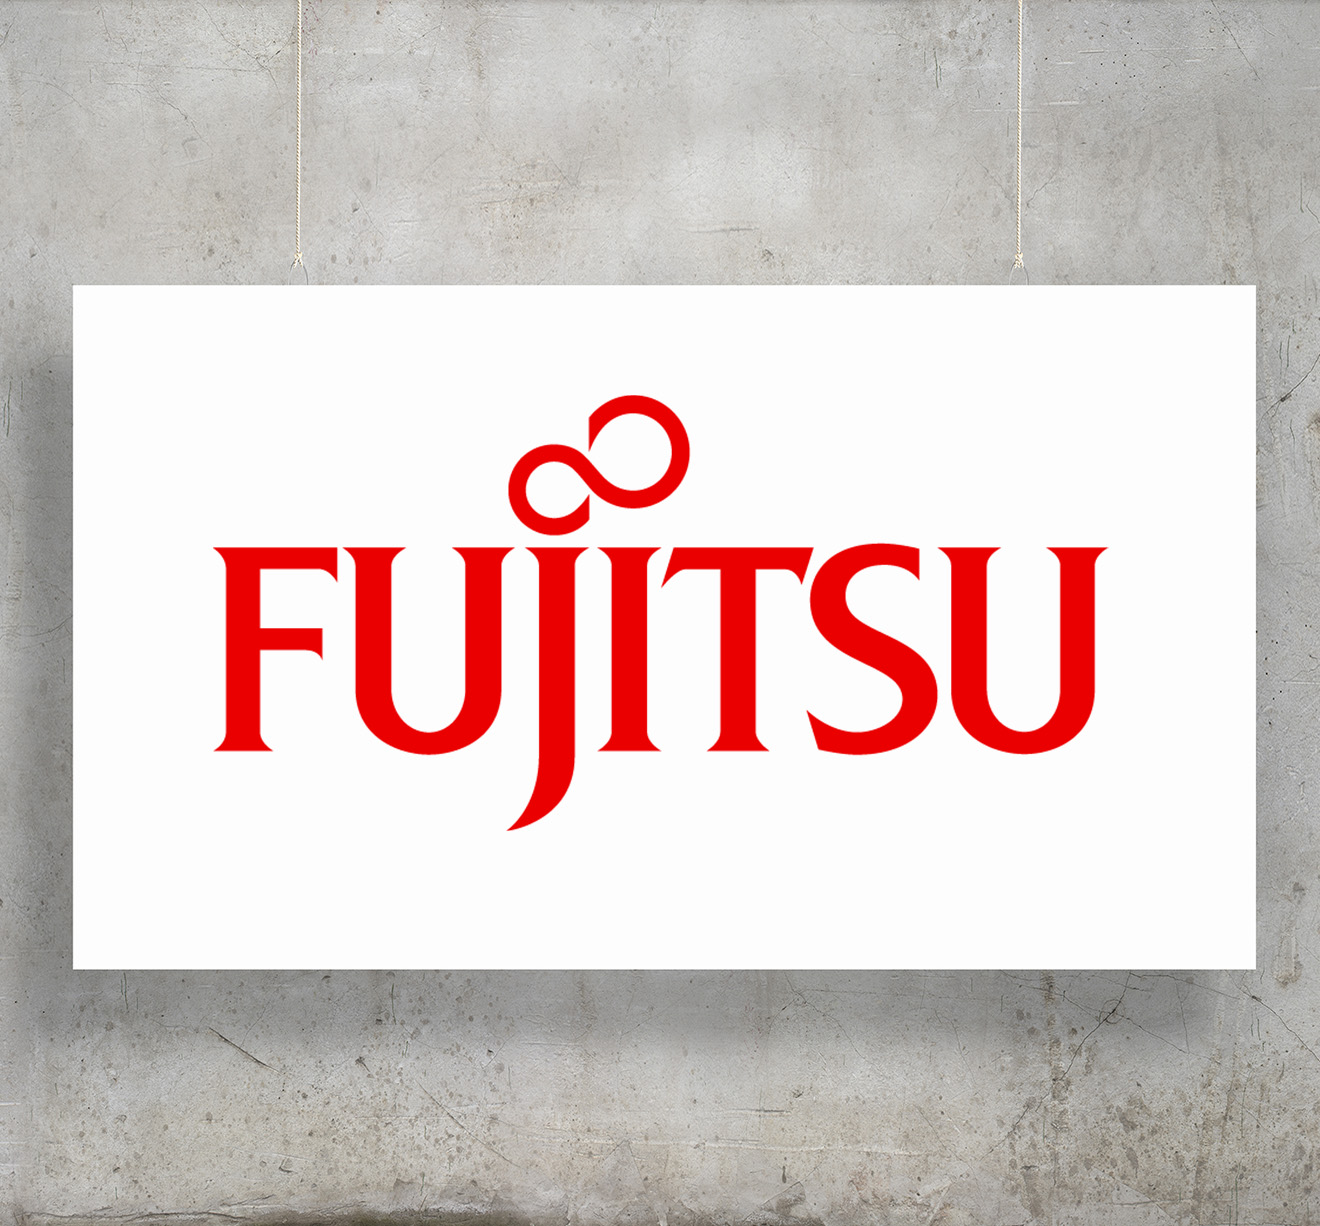 Fujitsu company profile image